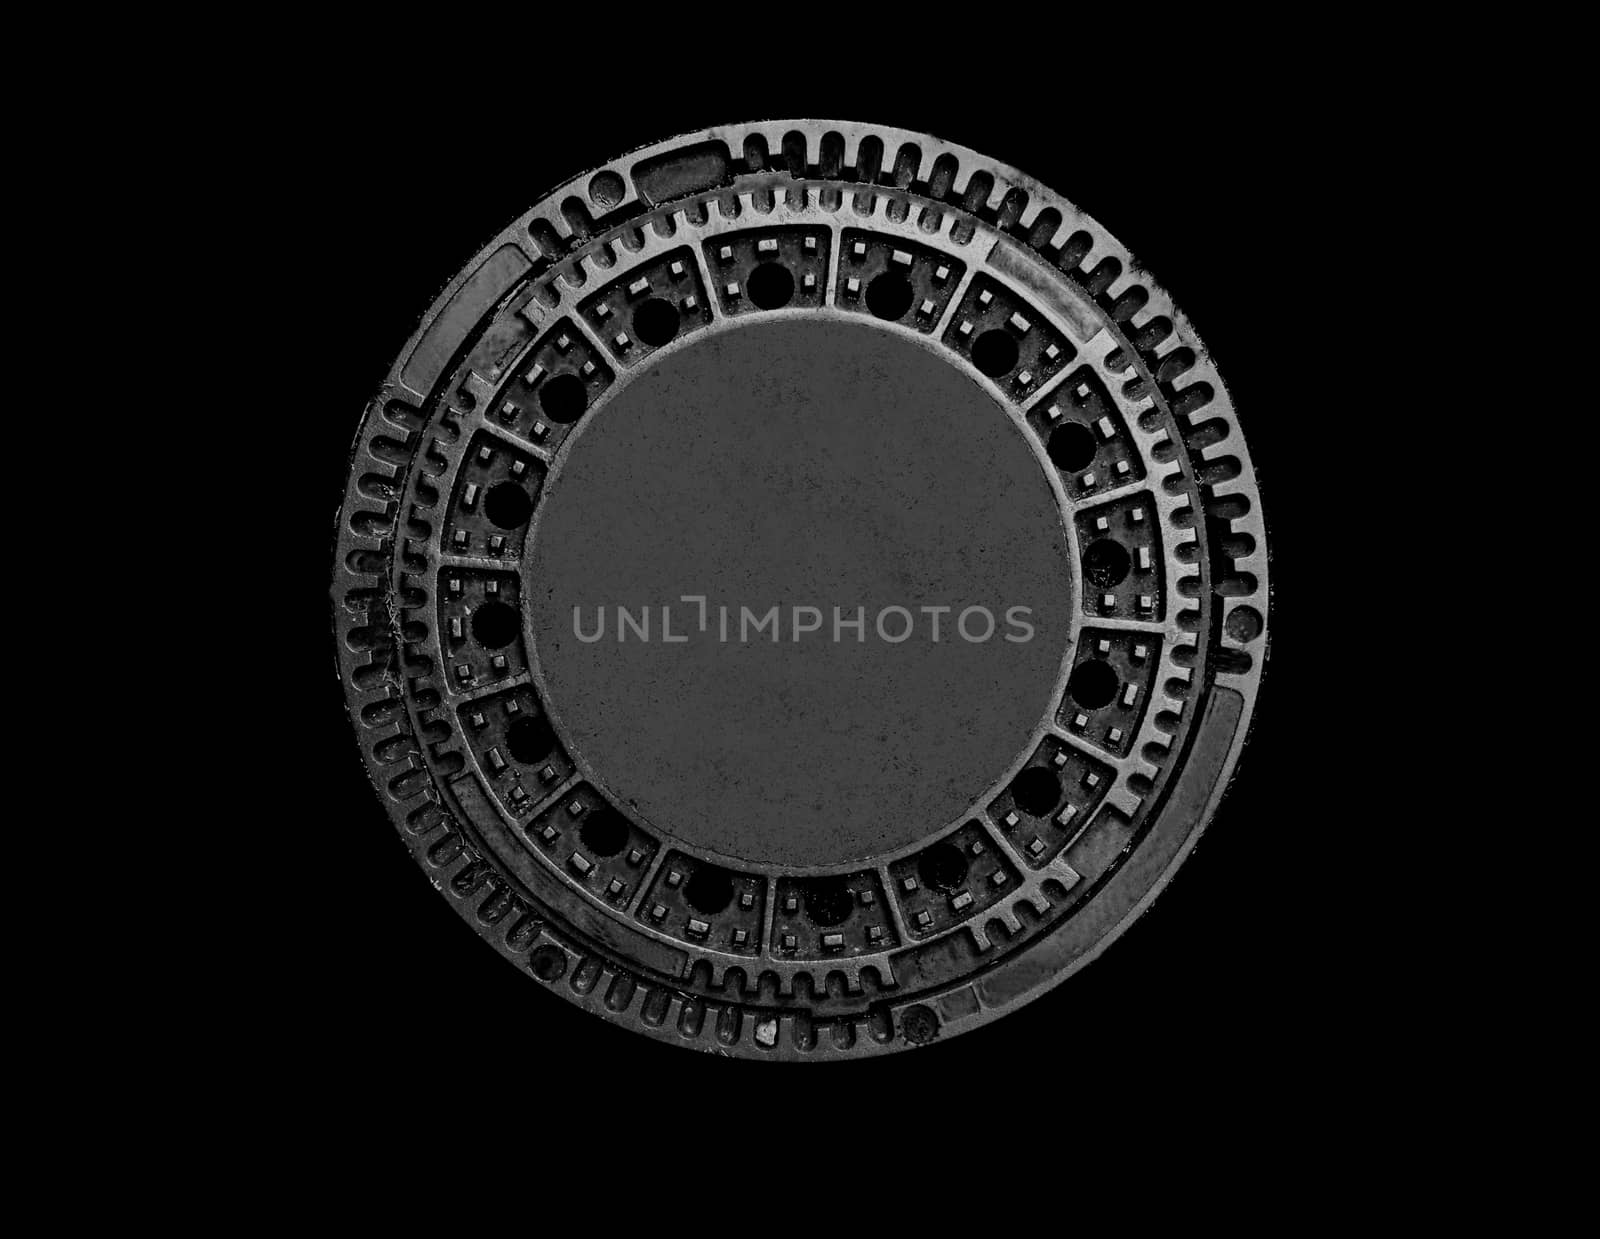 Metal sewer manhole on a black background by Mastak80